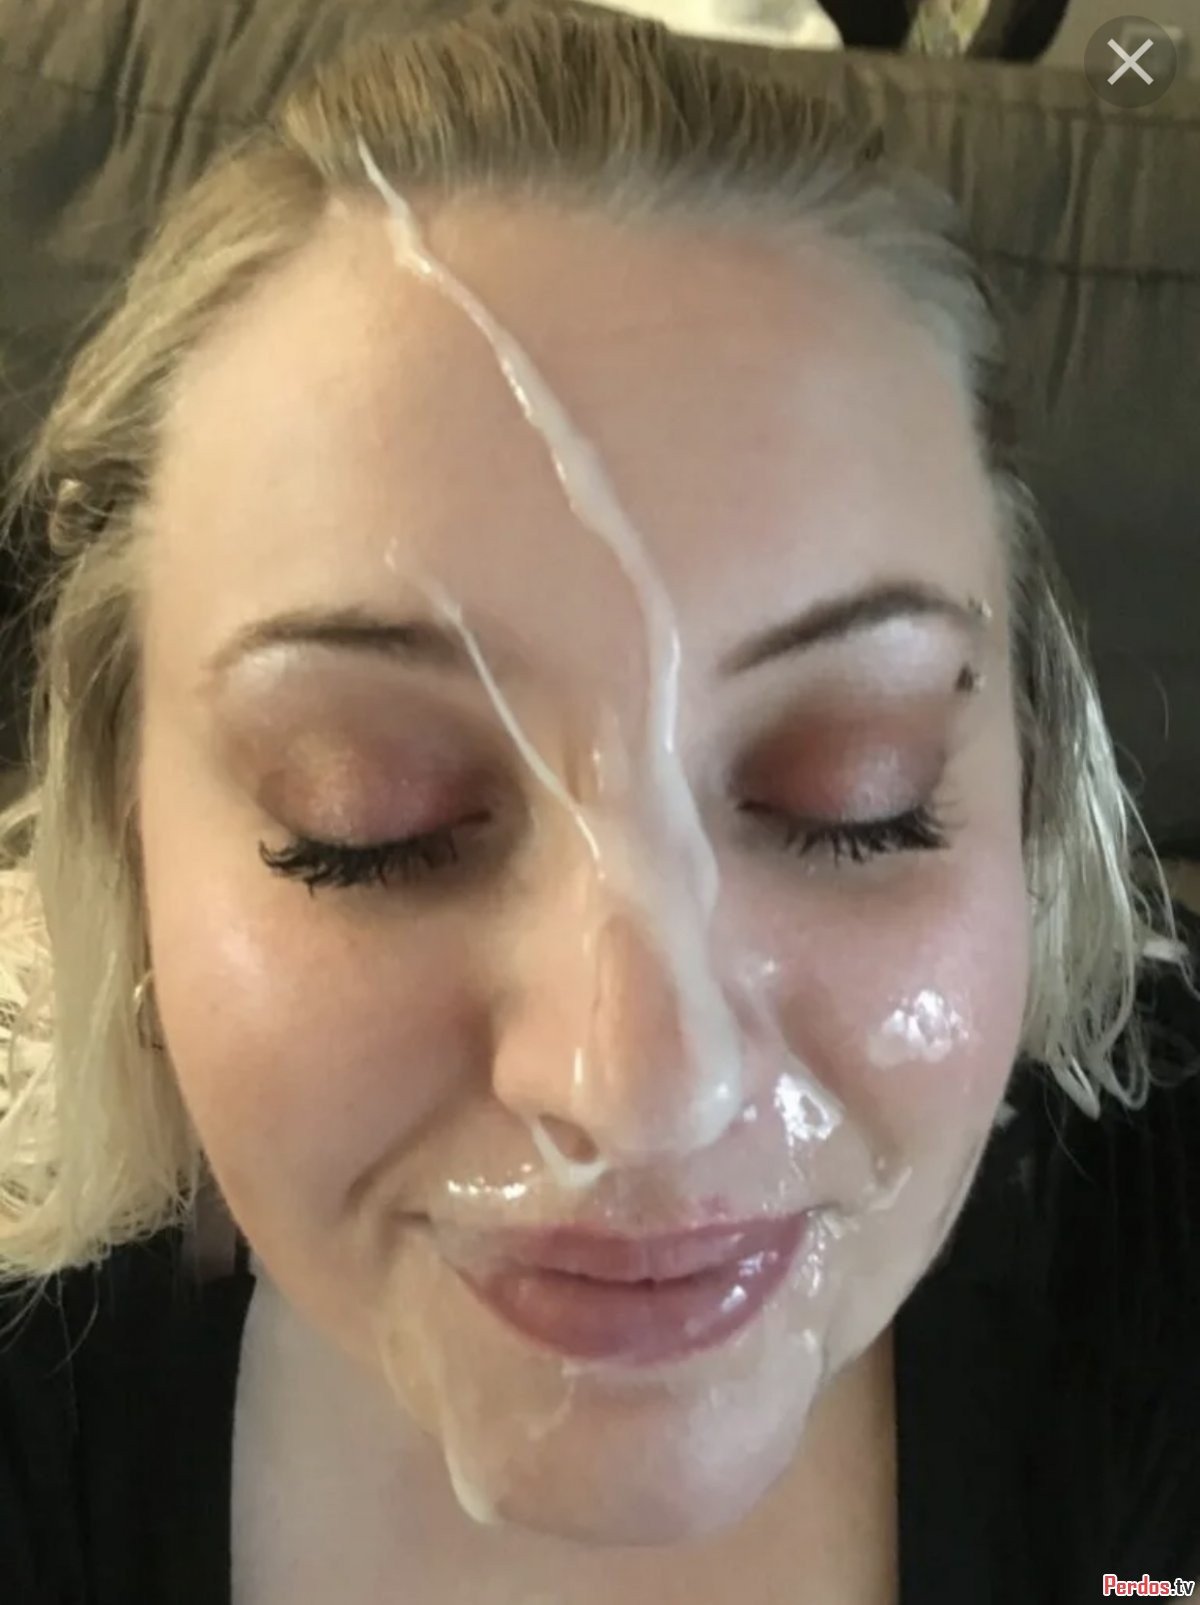 Сперма на лицо - порно фото с кончей на лице